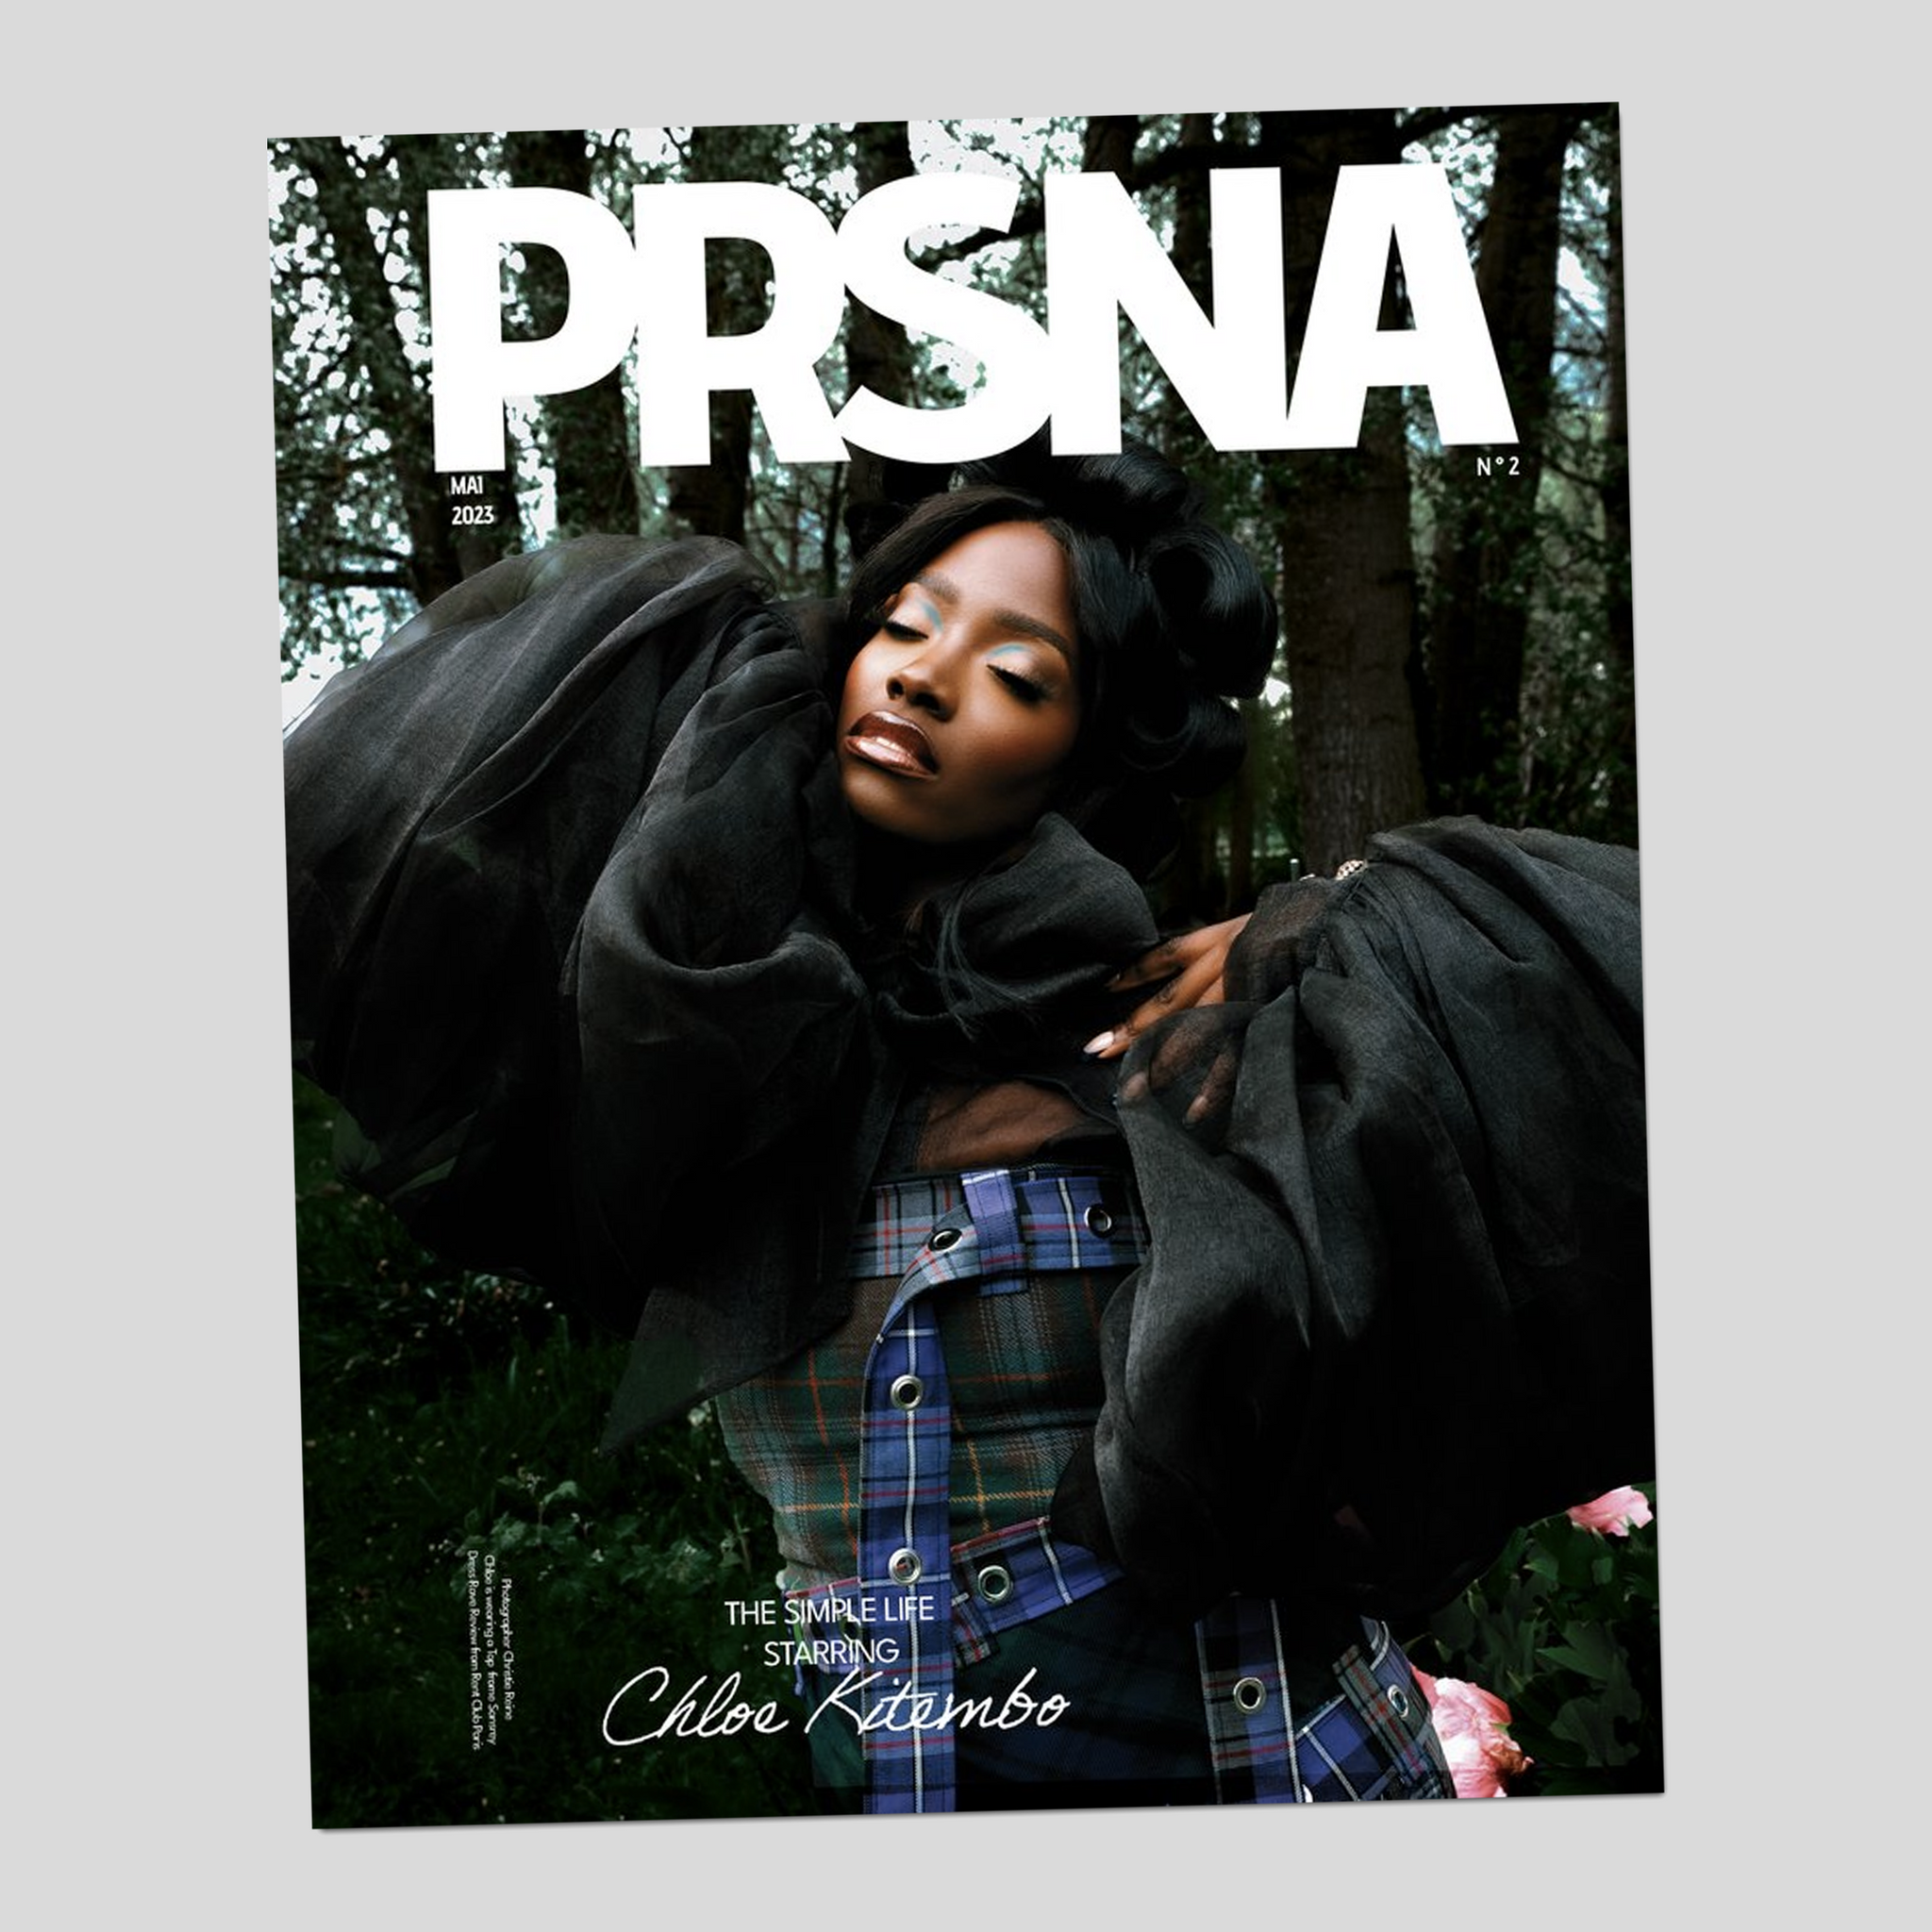 PRSNA Magazine #2